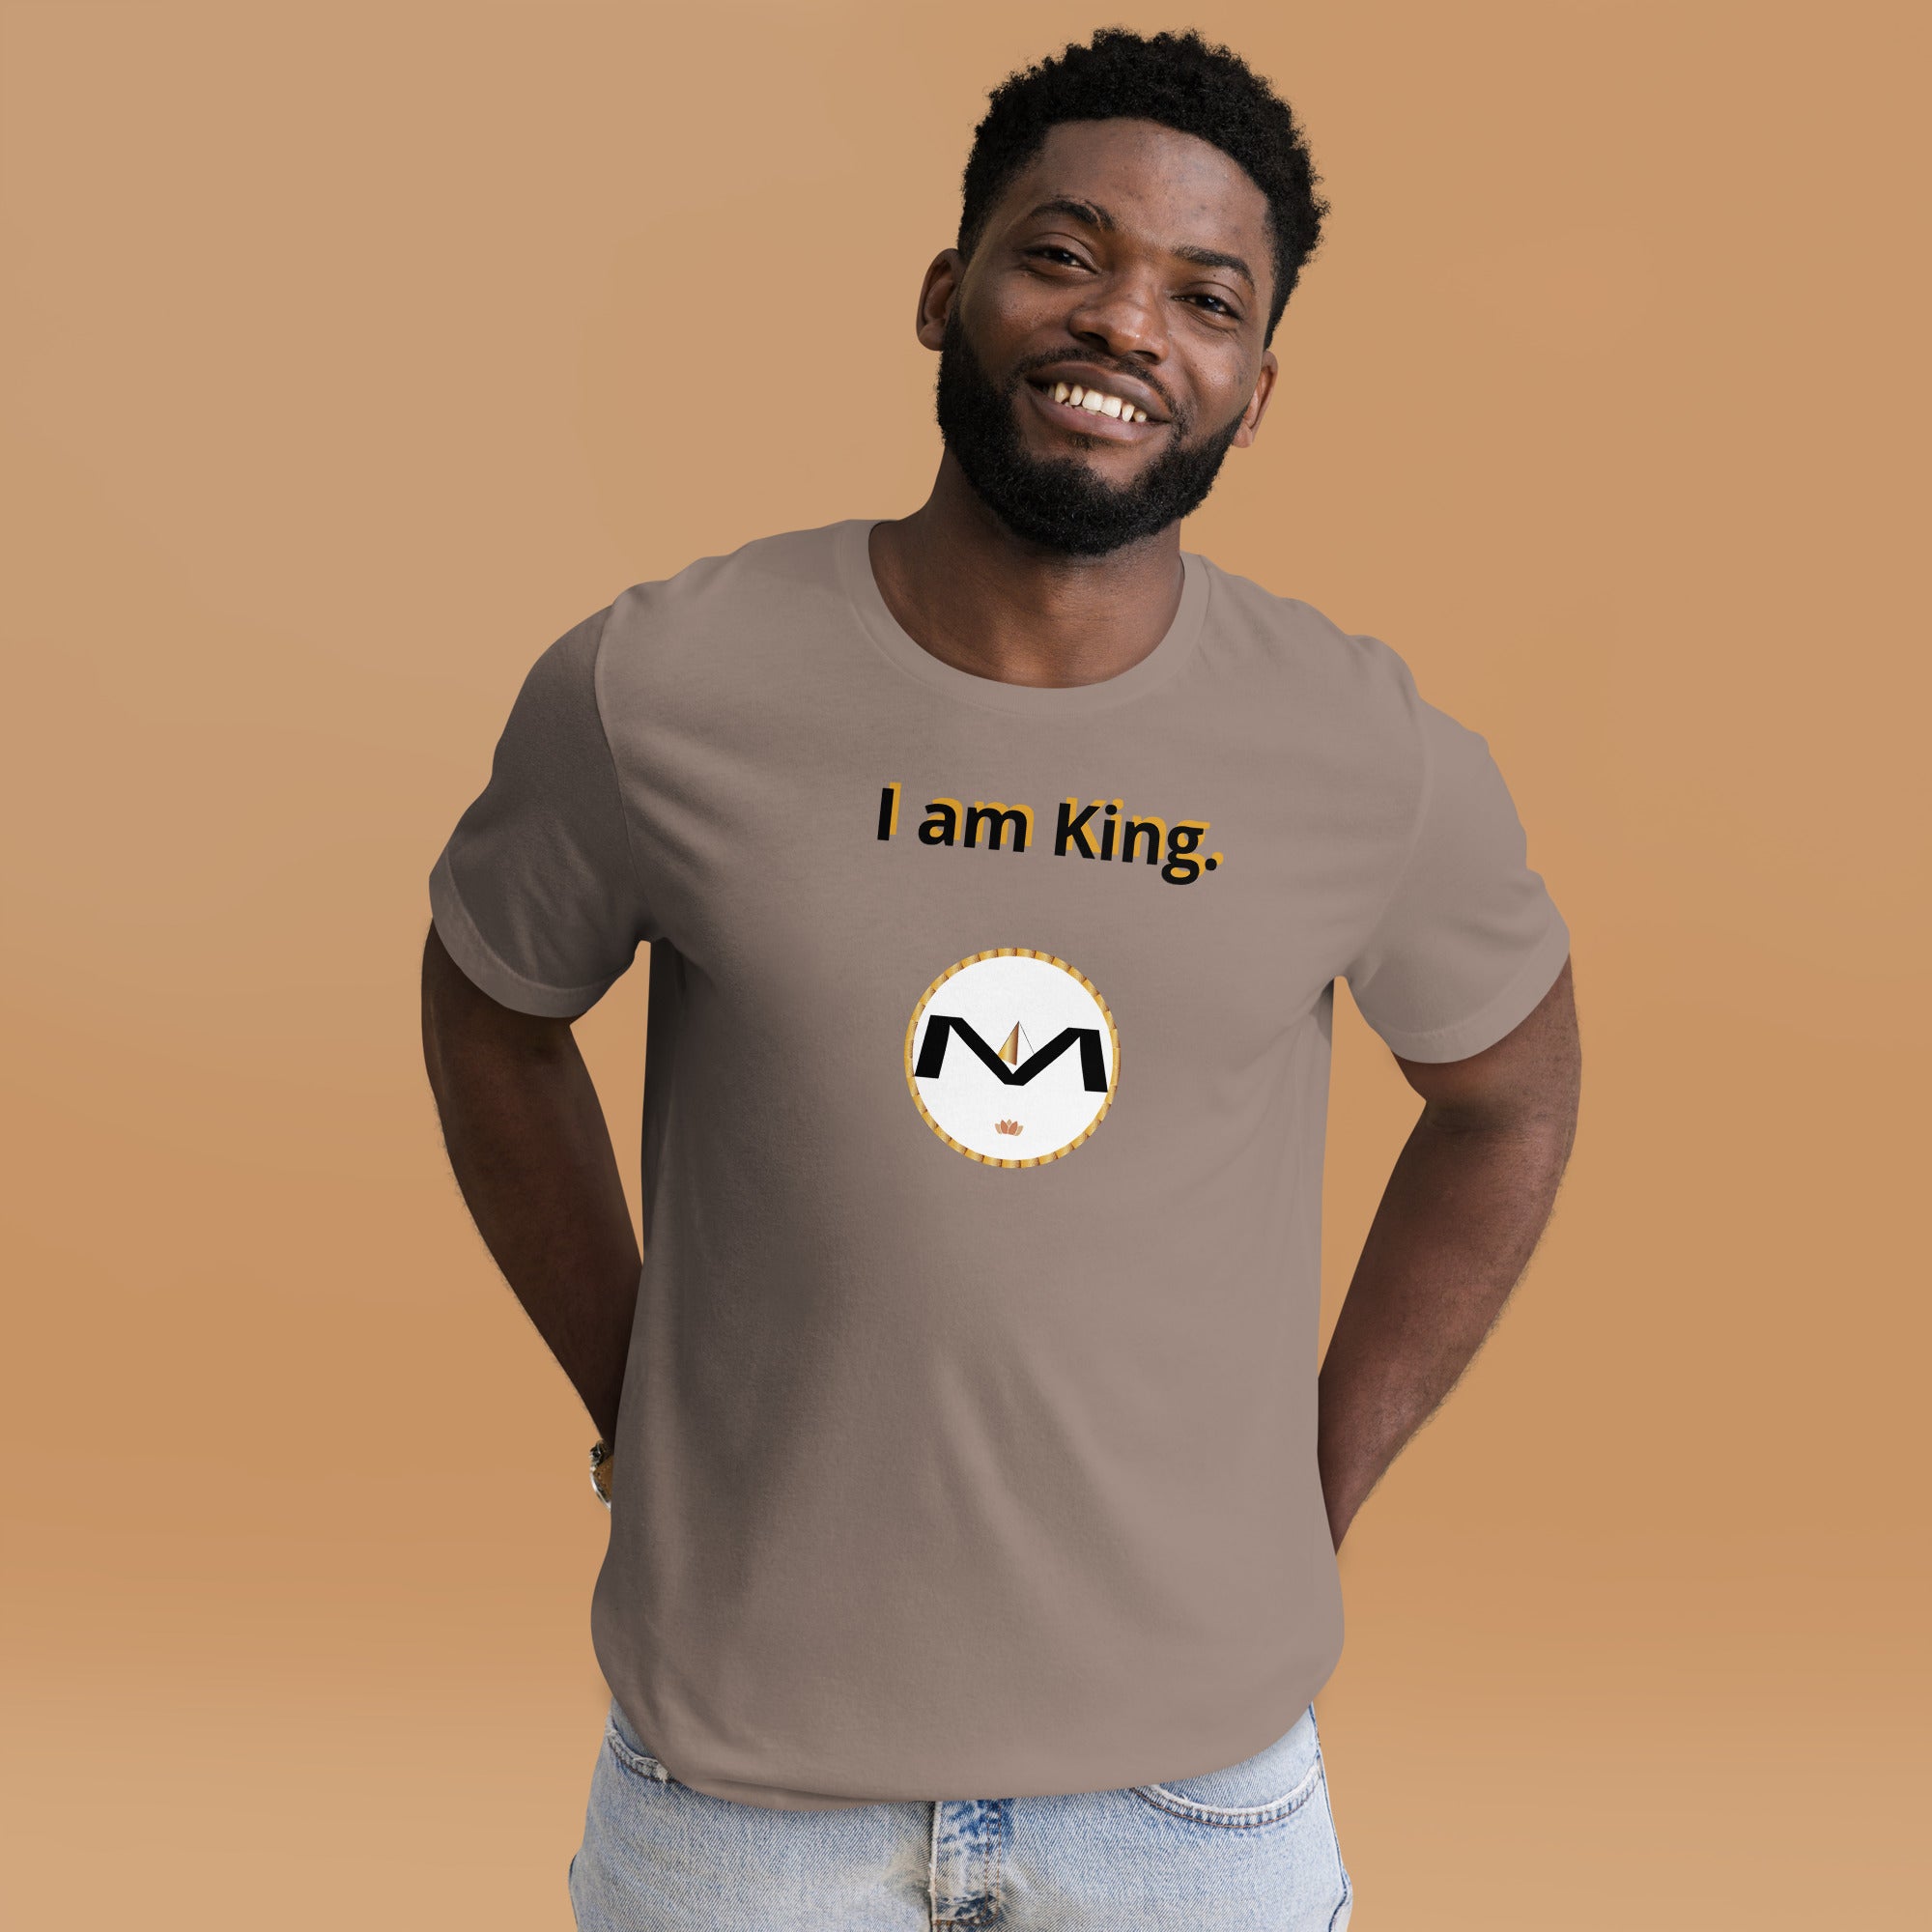 ⭐MOLIAE Beauty "I am King " T-Shirt